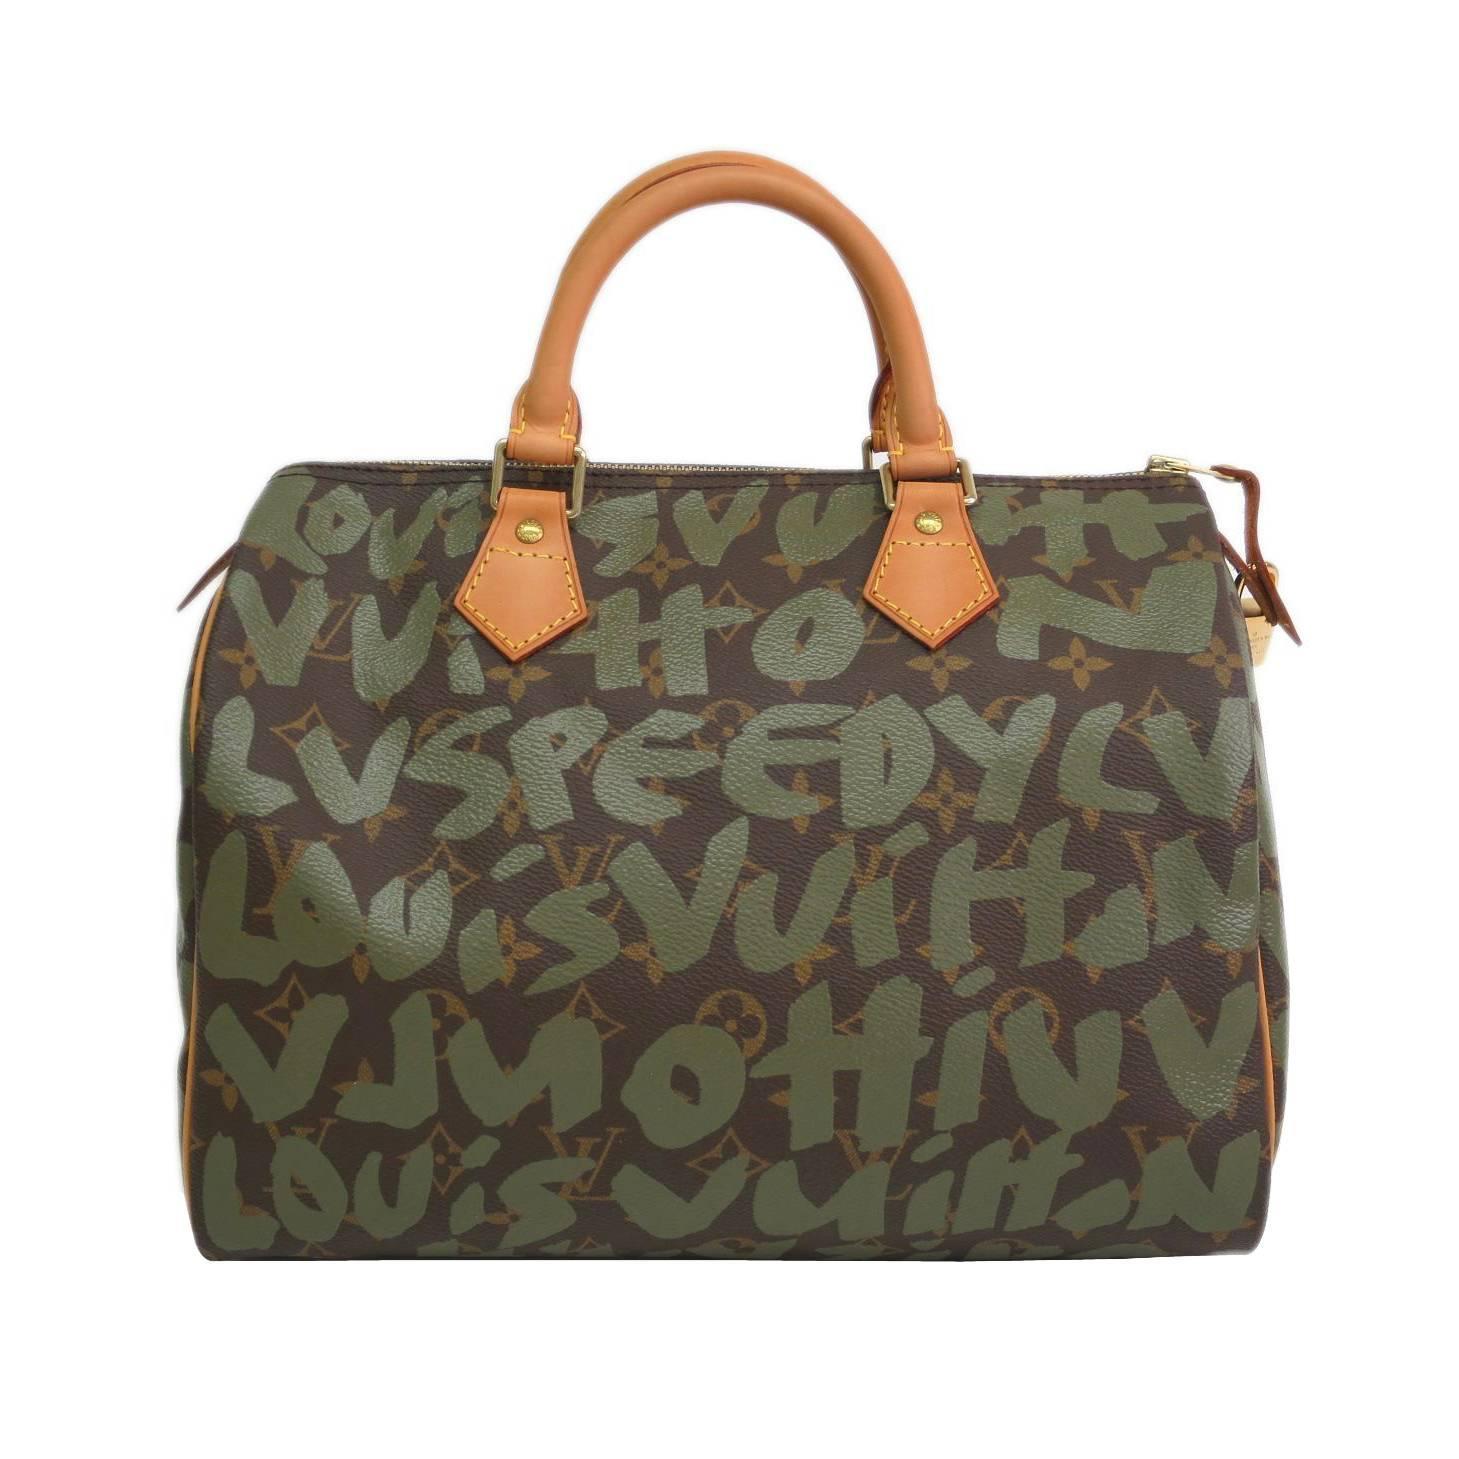 Louis Vuitton Limited Edition Stephen Sprouse Green Graffiti Speedy 30 Satchel at 1stdibs